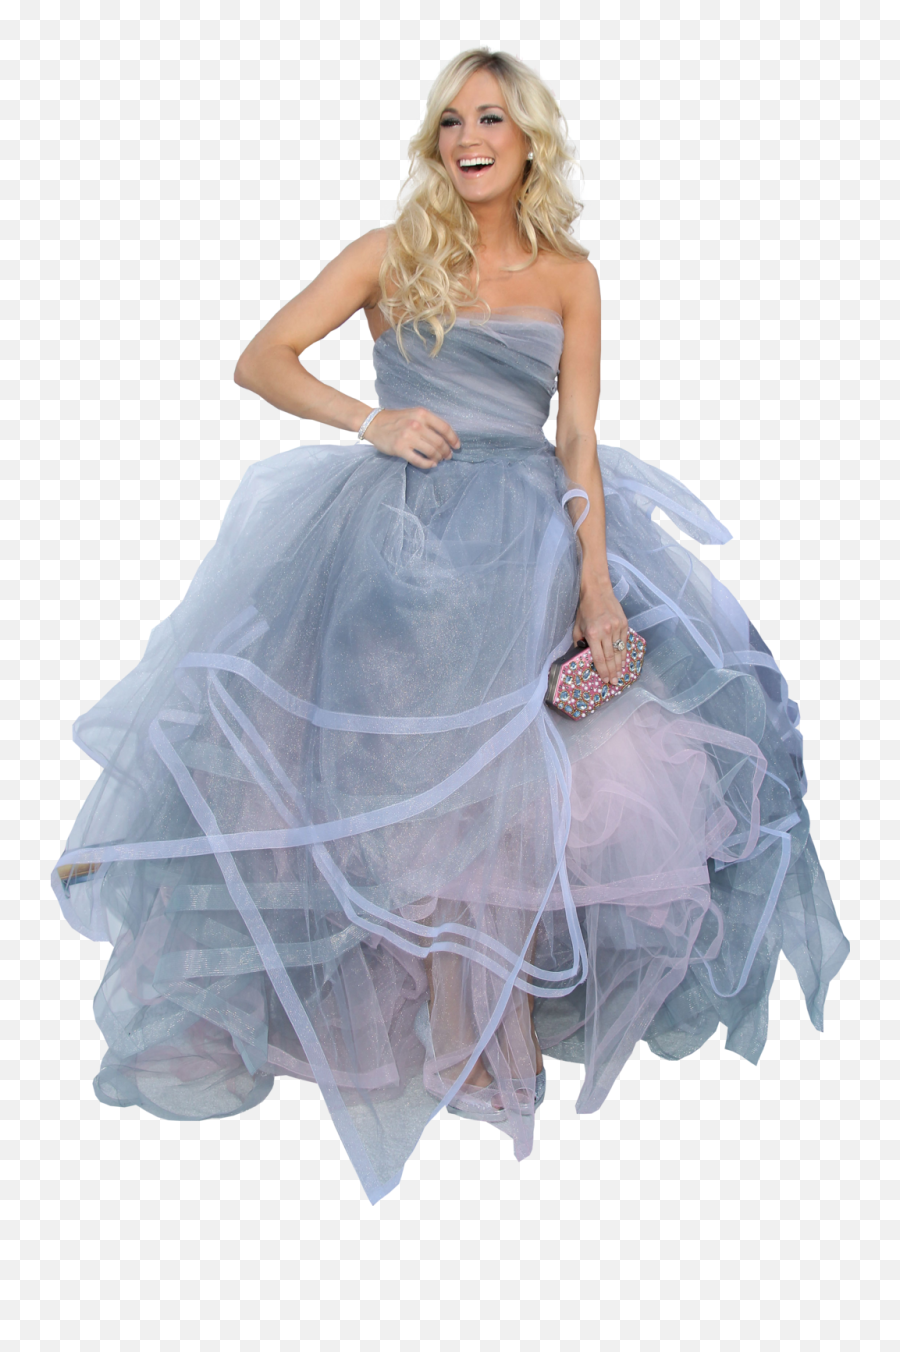 Carrie Underwood Transparent Background Png Svg Clip Art - Portable Network Graphics,Model Transparent Background